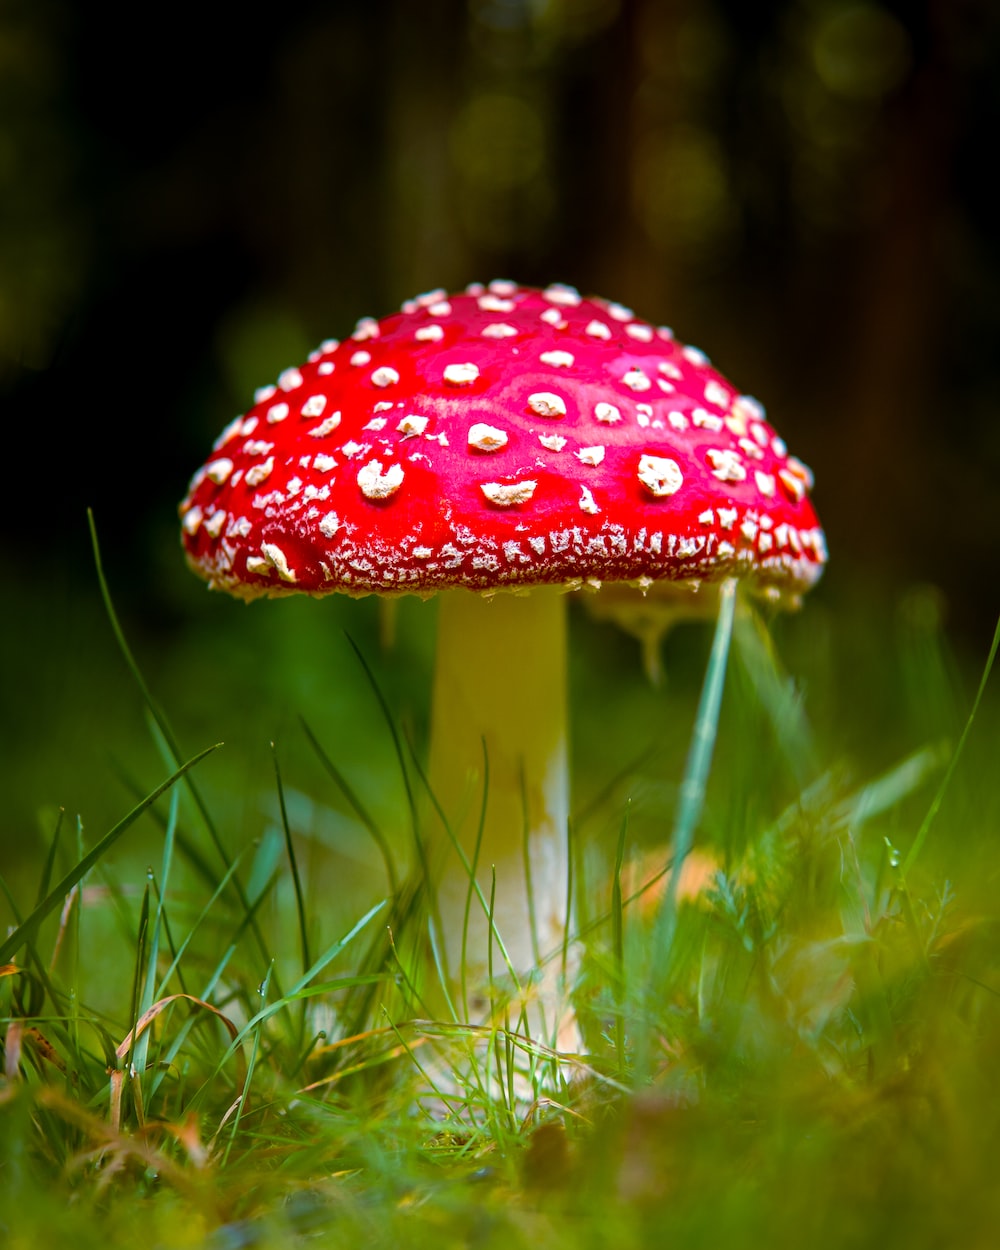 Growing Mushrooms: Beginners Guide to Mushroom Cultivation